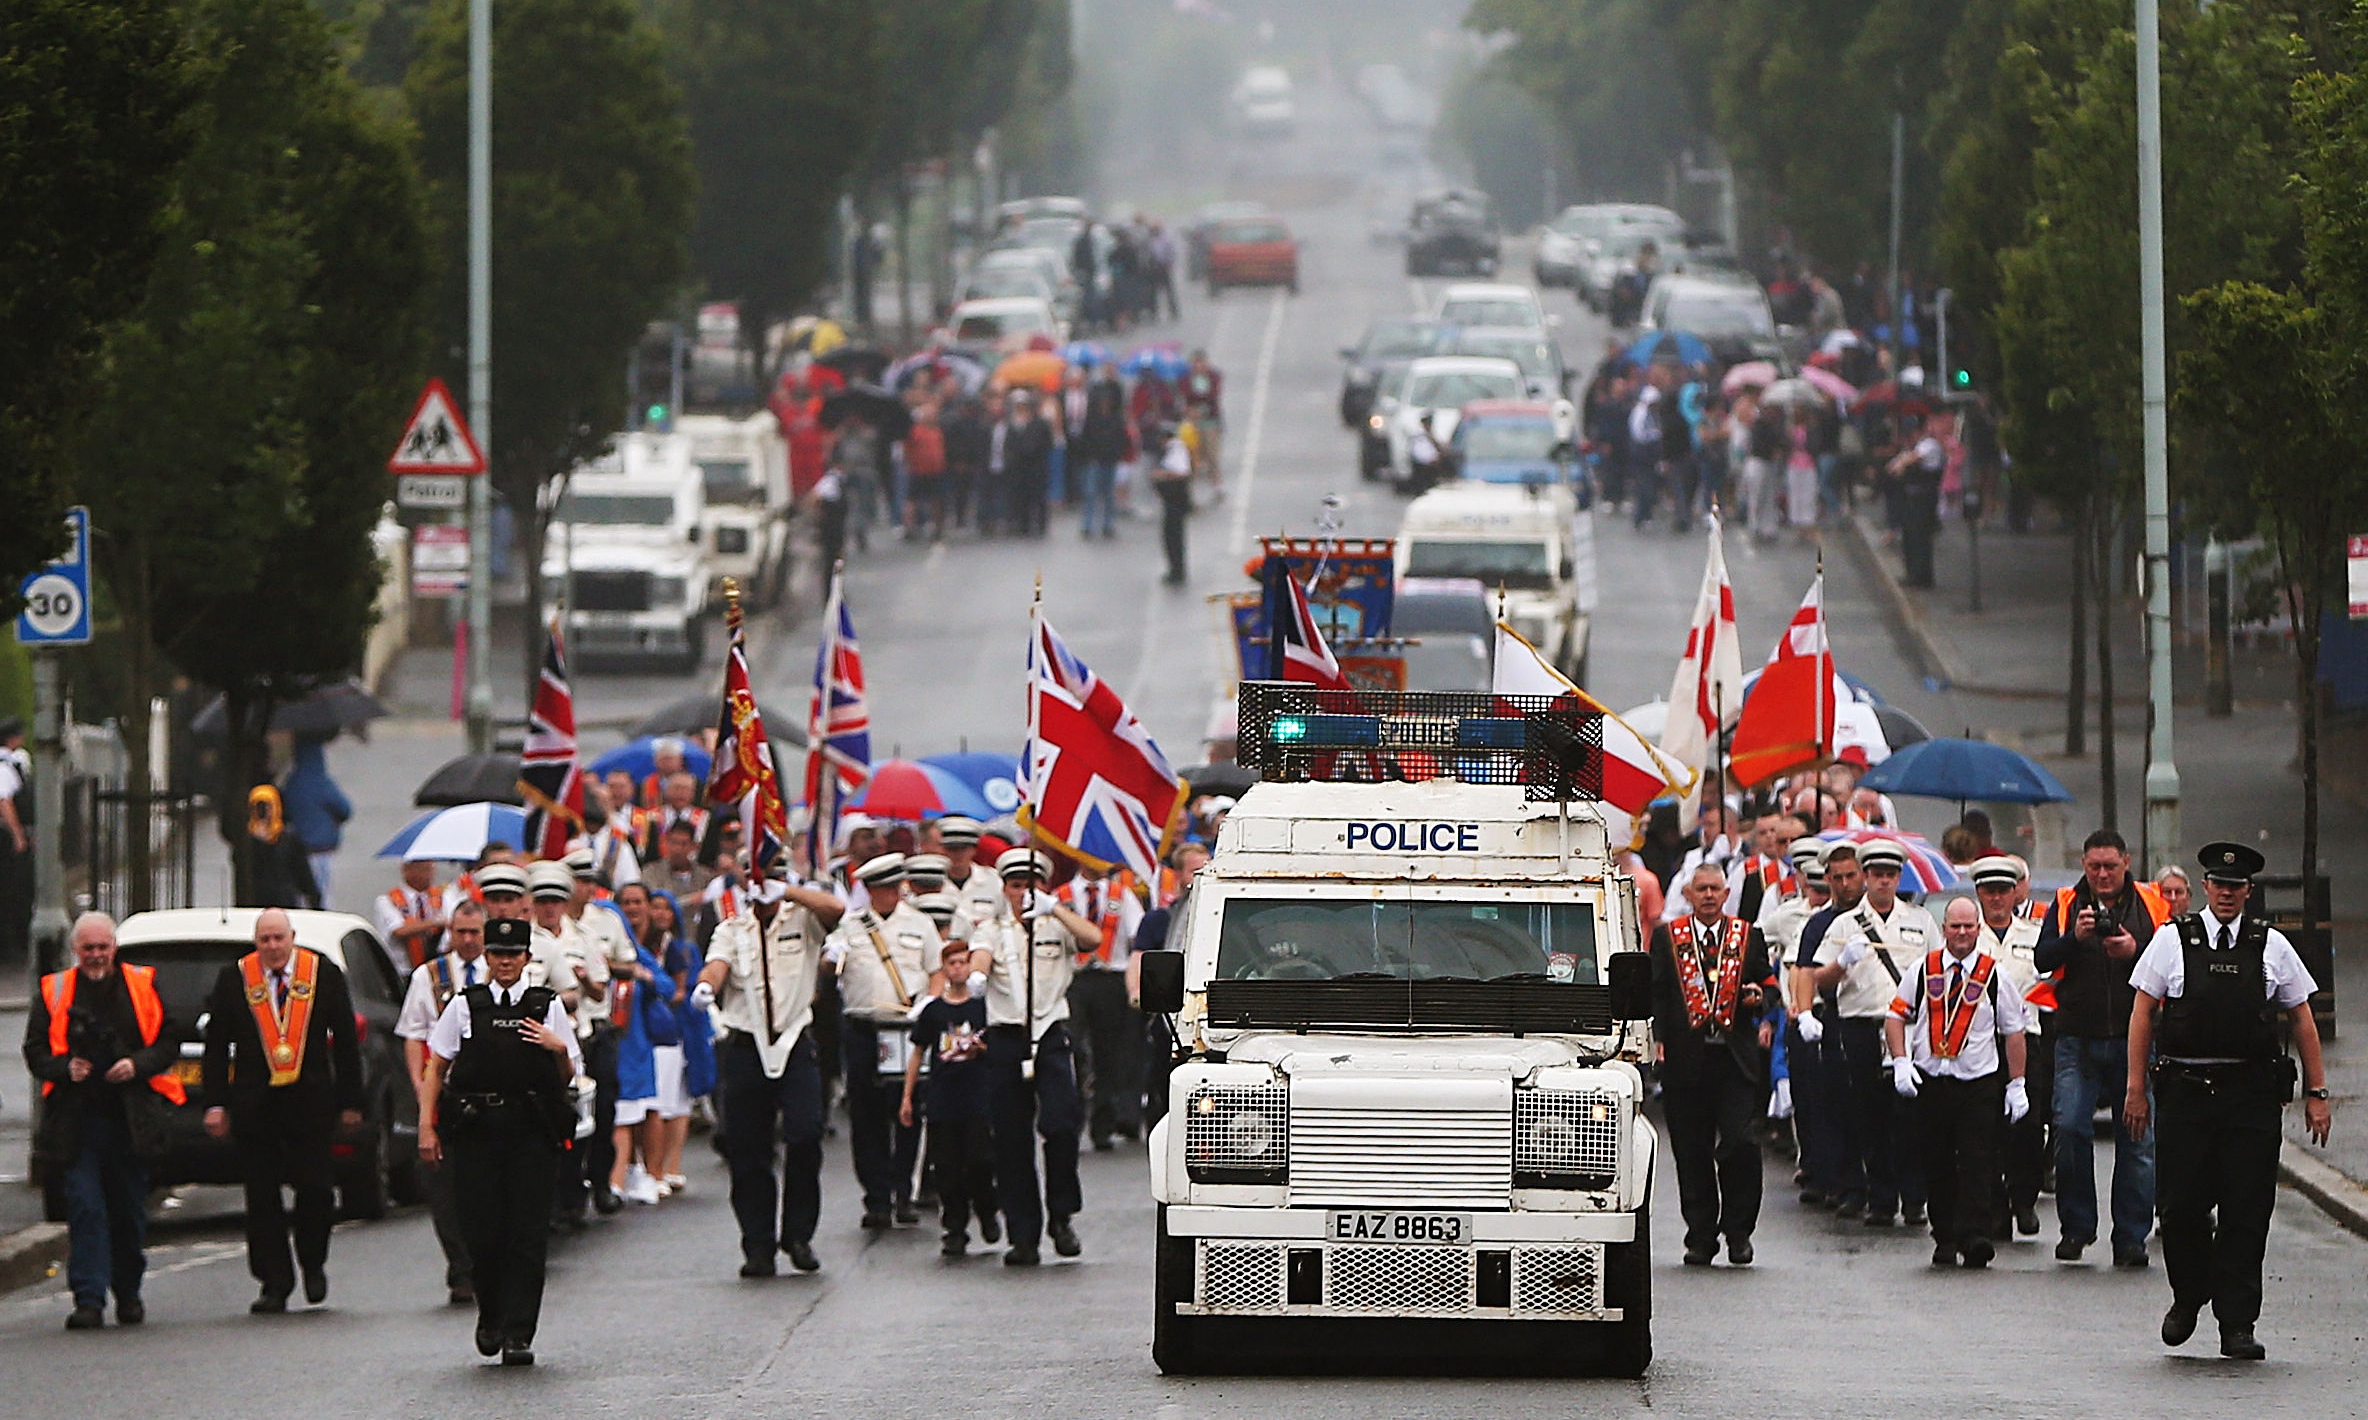 Orange Order march in Belfast begins peacefully UK news The Guardian